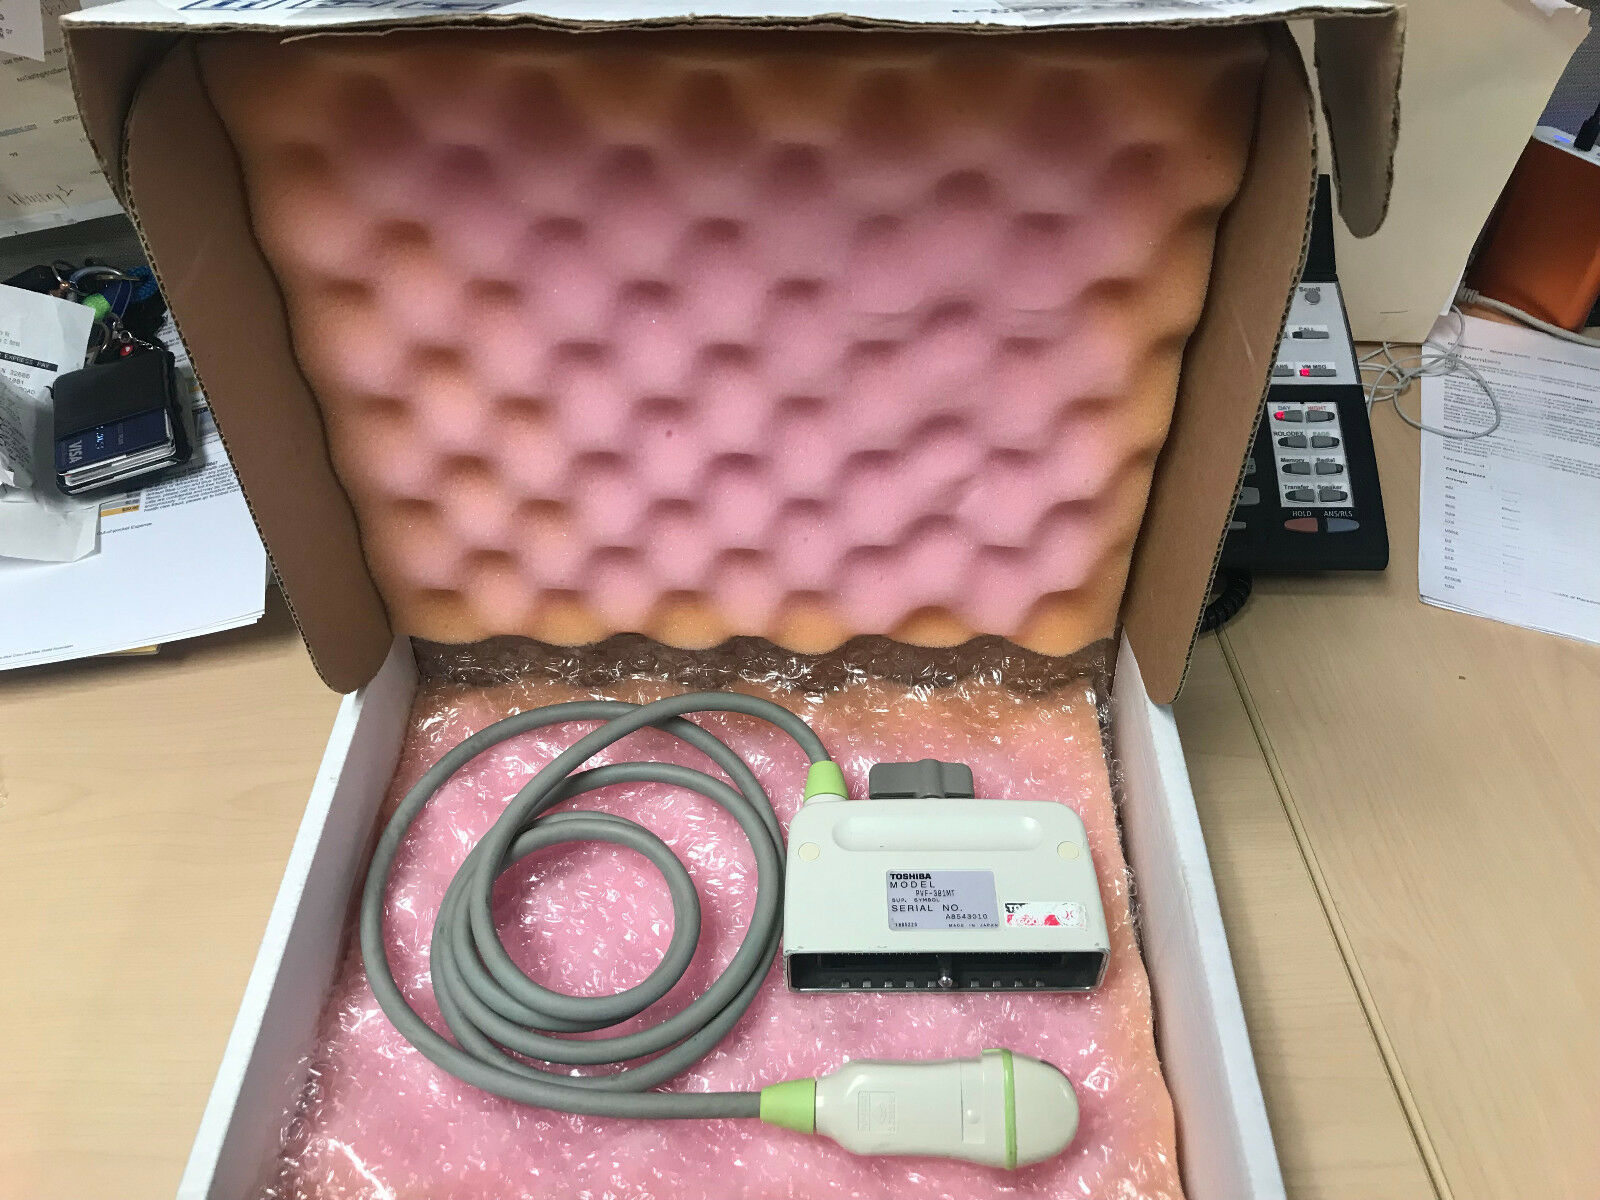 Toshiba PVF-381 MT  Ultrasound Tranduser Probe Micro convex (25) DIAGNOSTIC ULTRASOUND MACHINES FOR SALE